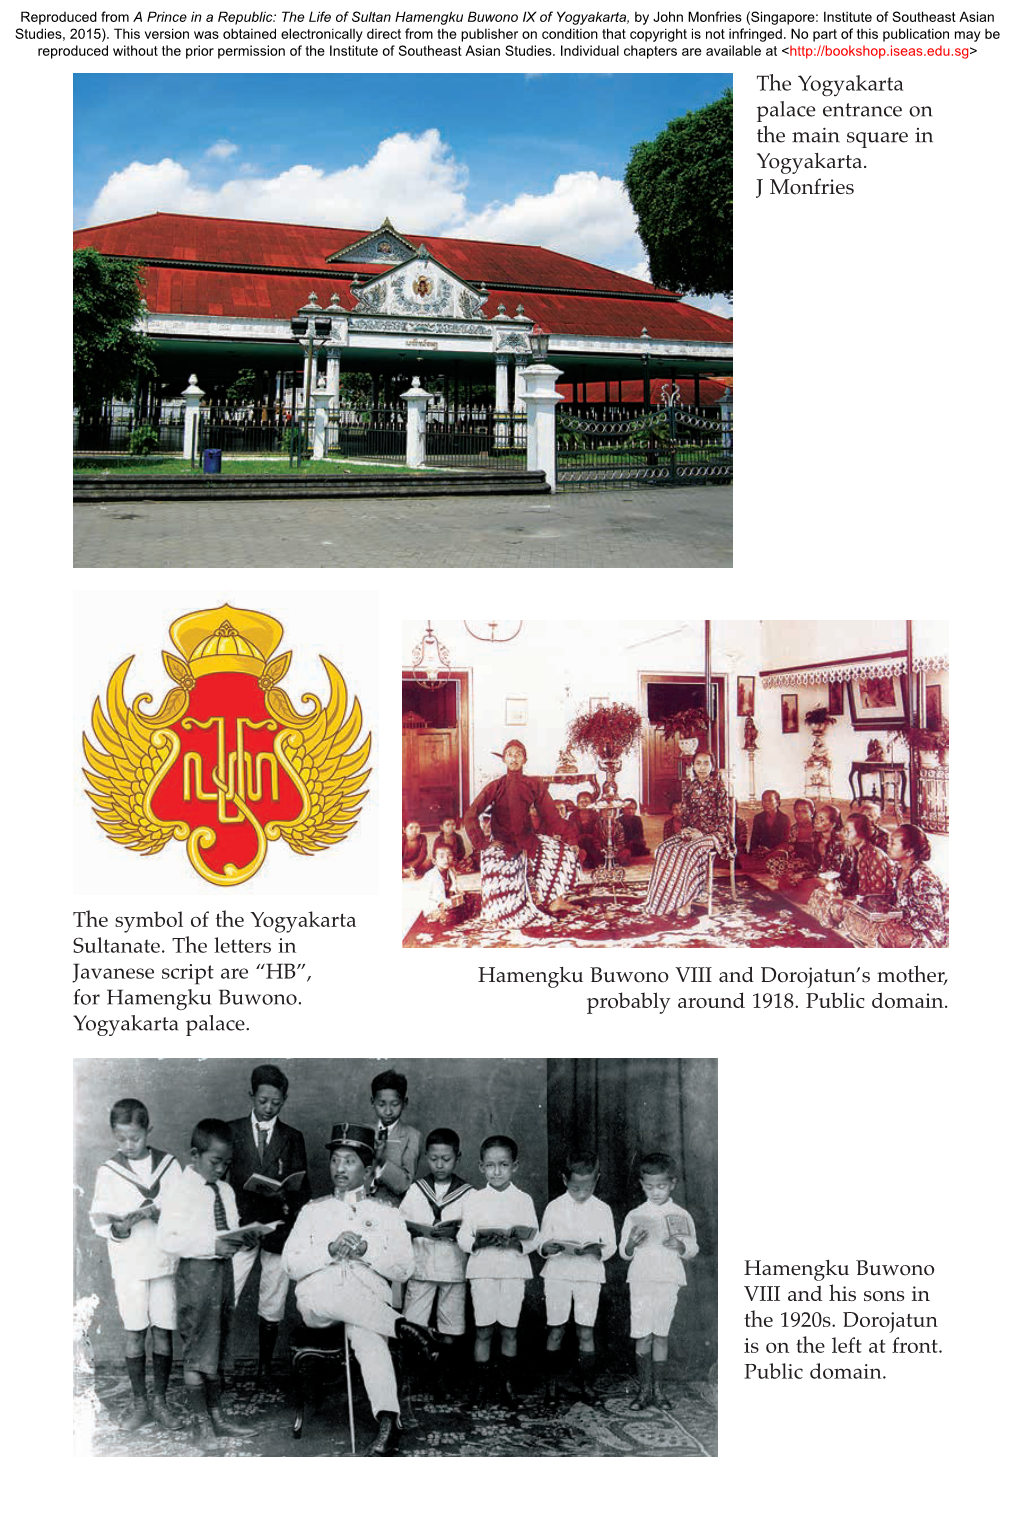 The Life of Sultan Hamengku Buwono IX of Yogyakarta